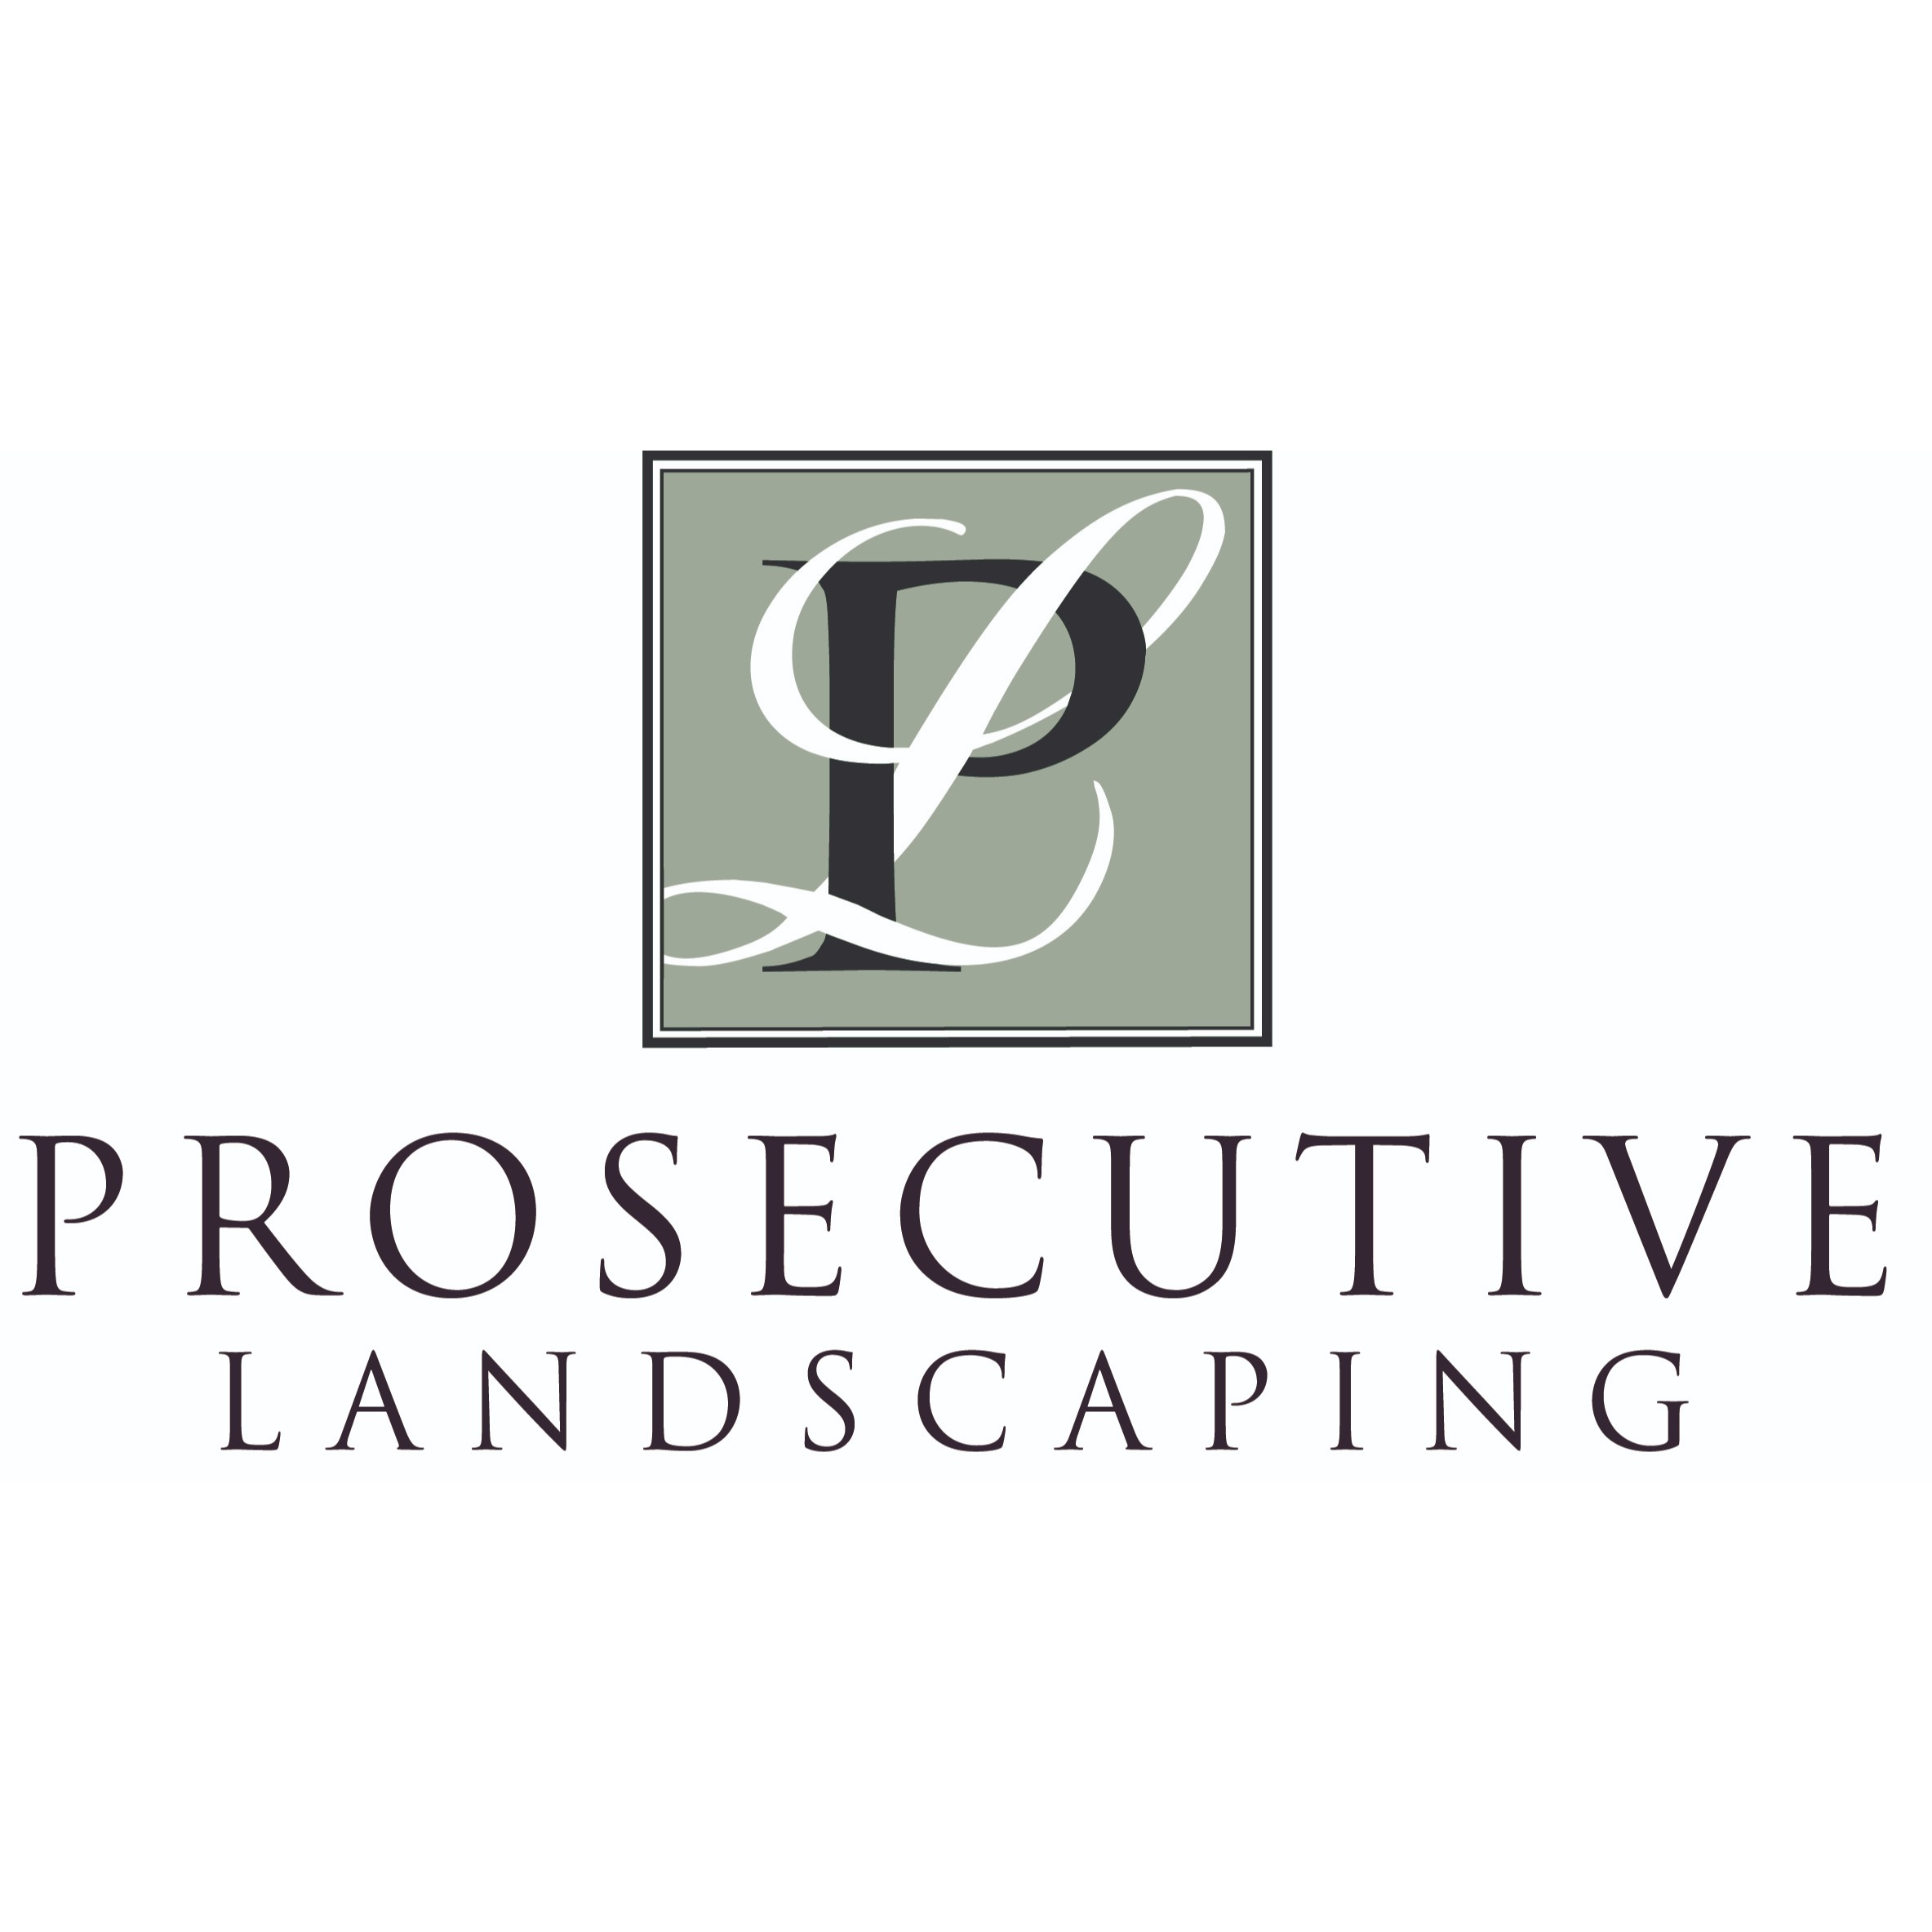 Prosecutive Landscaping - Sandy, UT - (801)293-9273 | ShowMeLocal.com